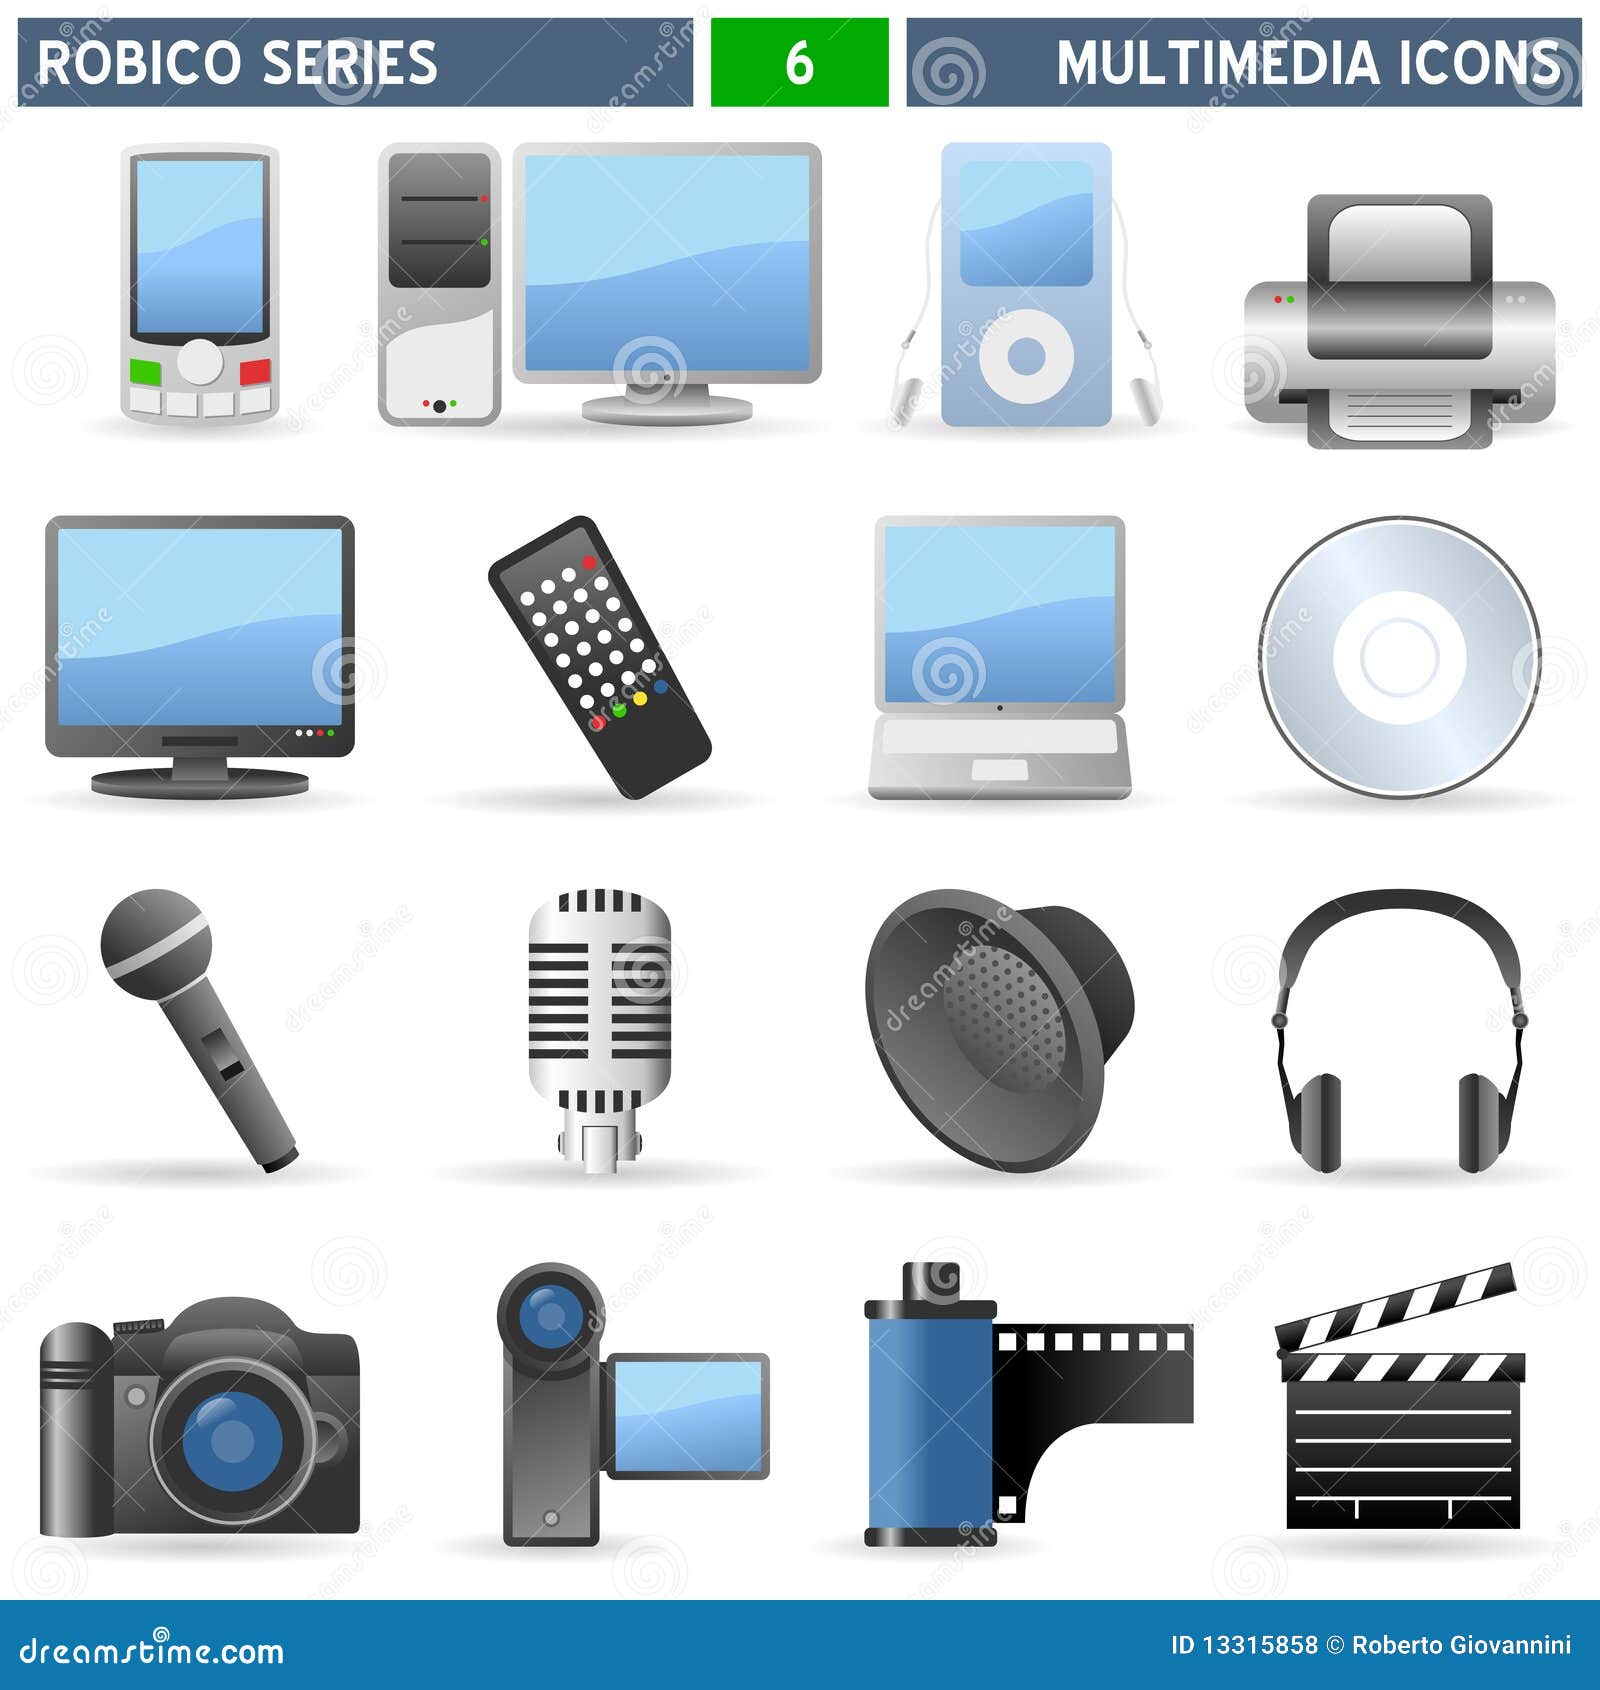 multimedia icons - robico series